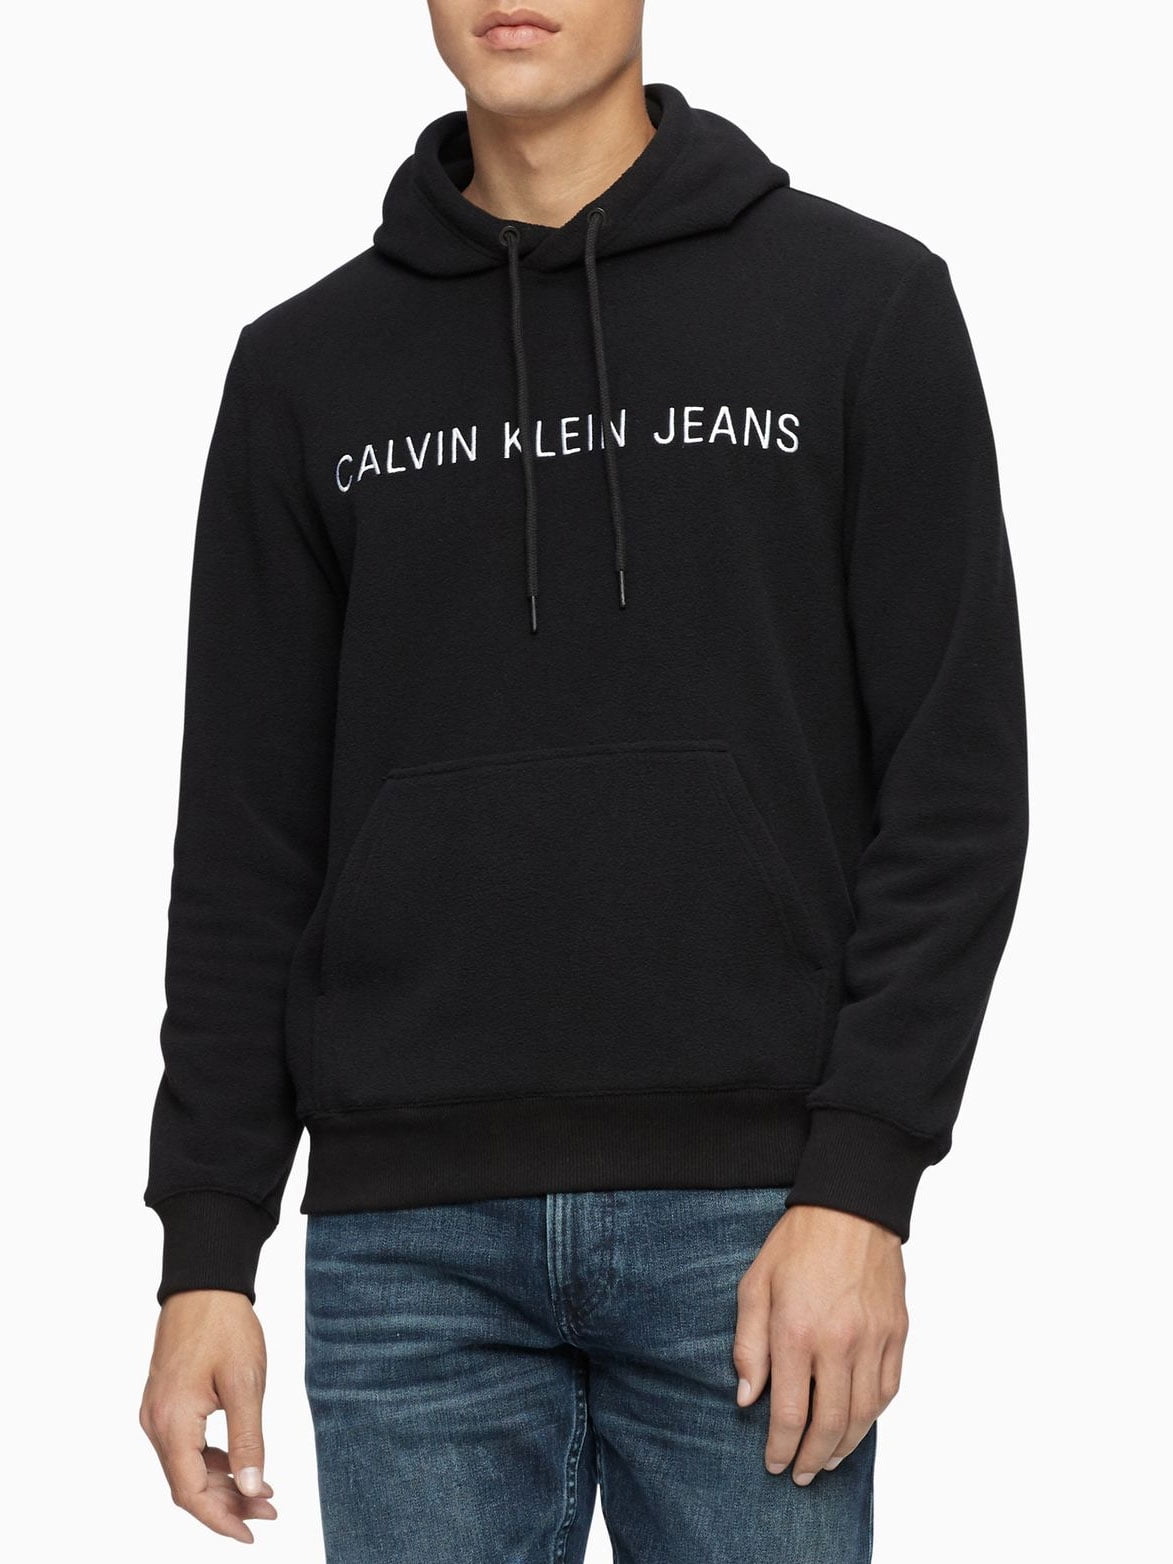 Calvin Klein Men's Polar Fleece Hoodie, Black, XLarge